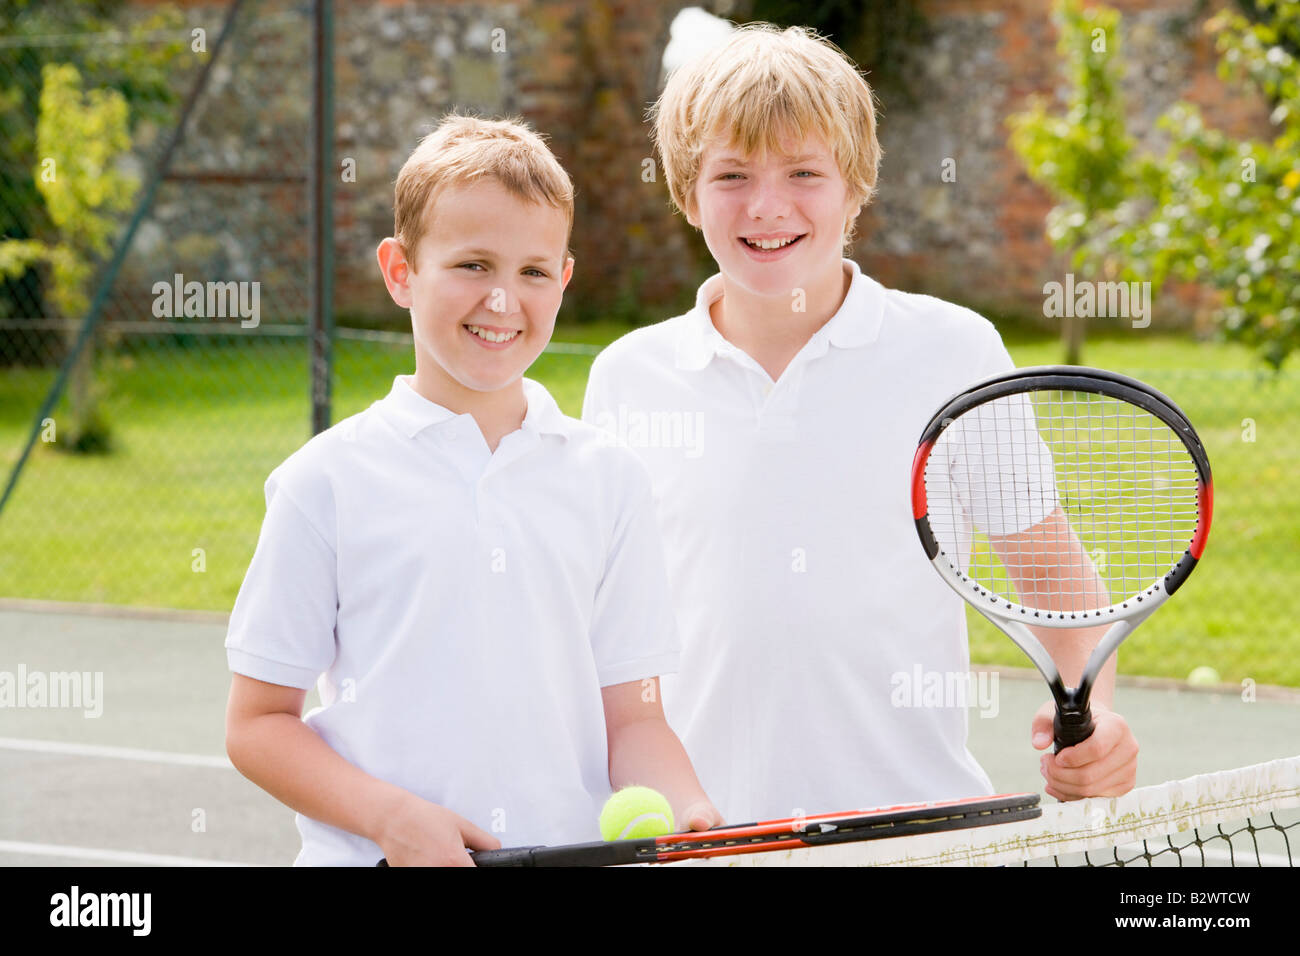 Tomboy childhood friend and the idiot. Теннис с друзьями. Картинка 2 мальчиков играющих в теннис. 2 Человека играют в теннис. Happy friends Play Tennis.